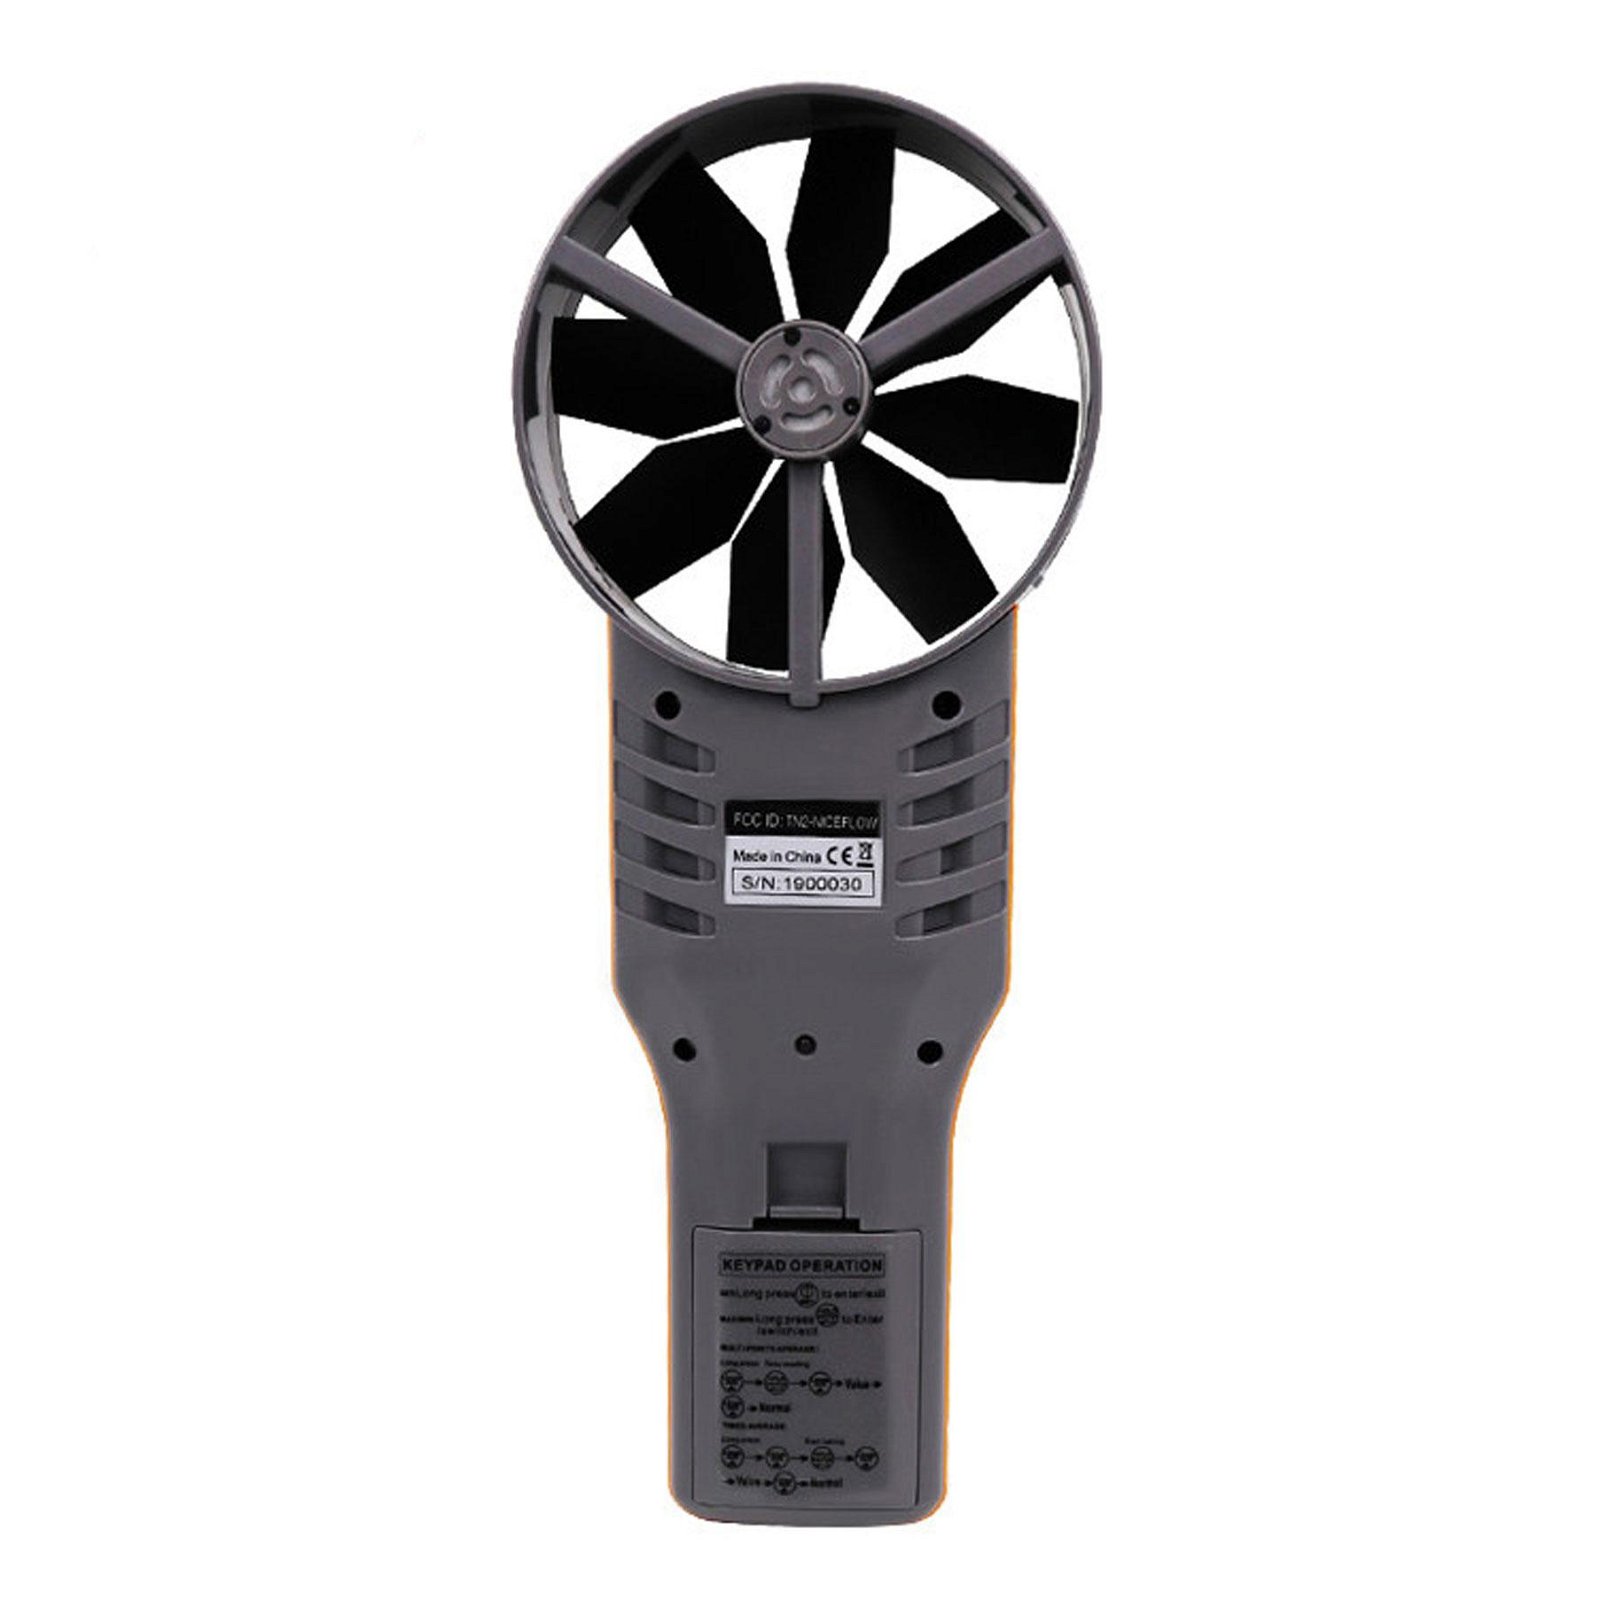 AZ89161 Bluetooth Air Flow Meter air velocity, temperature Wind Speed Meter 3